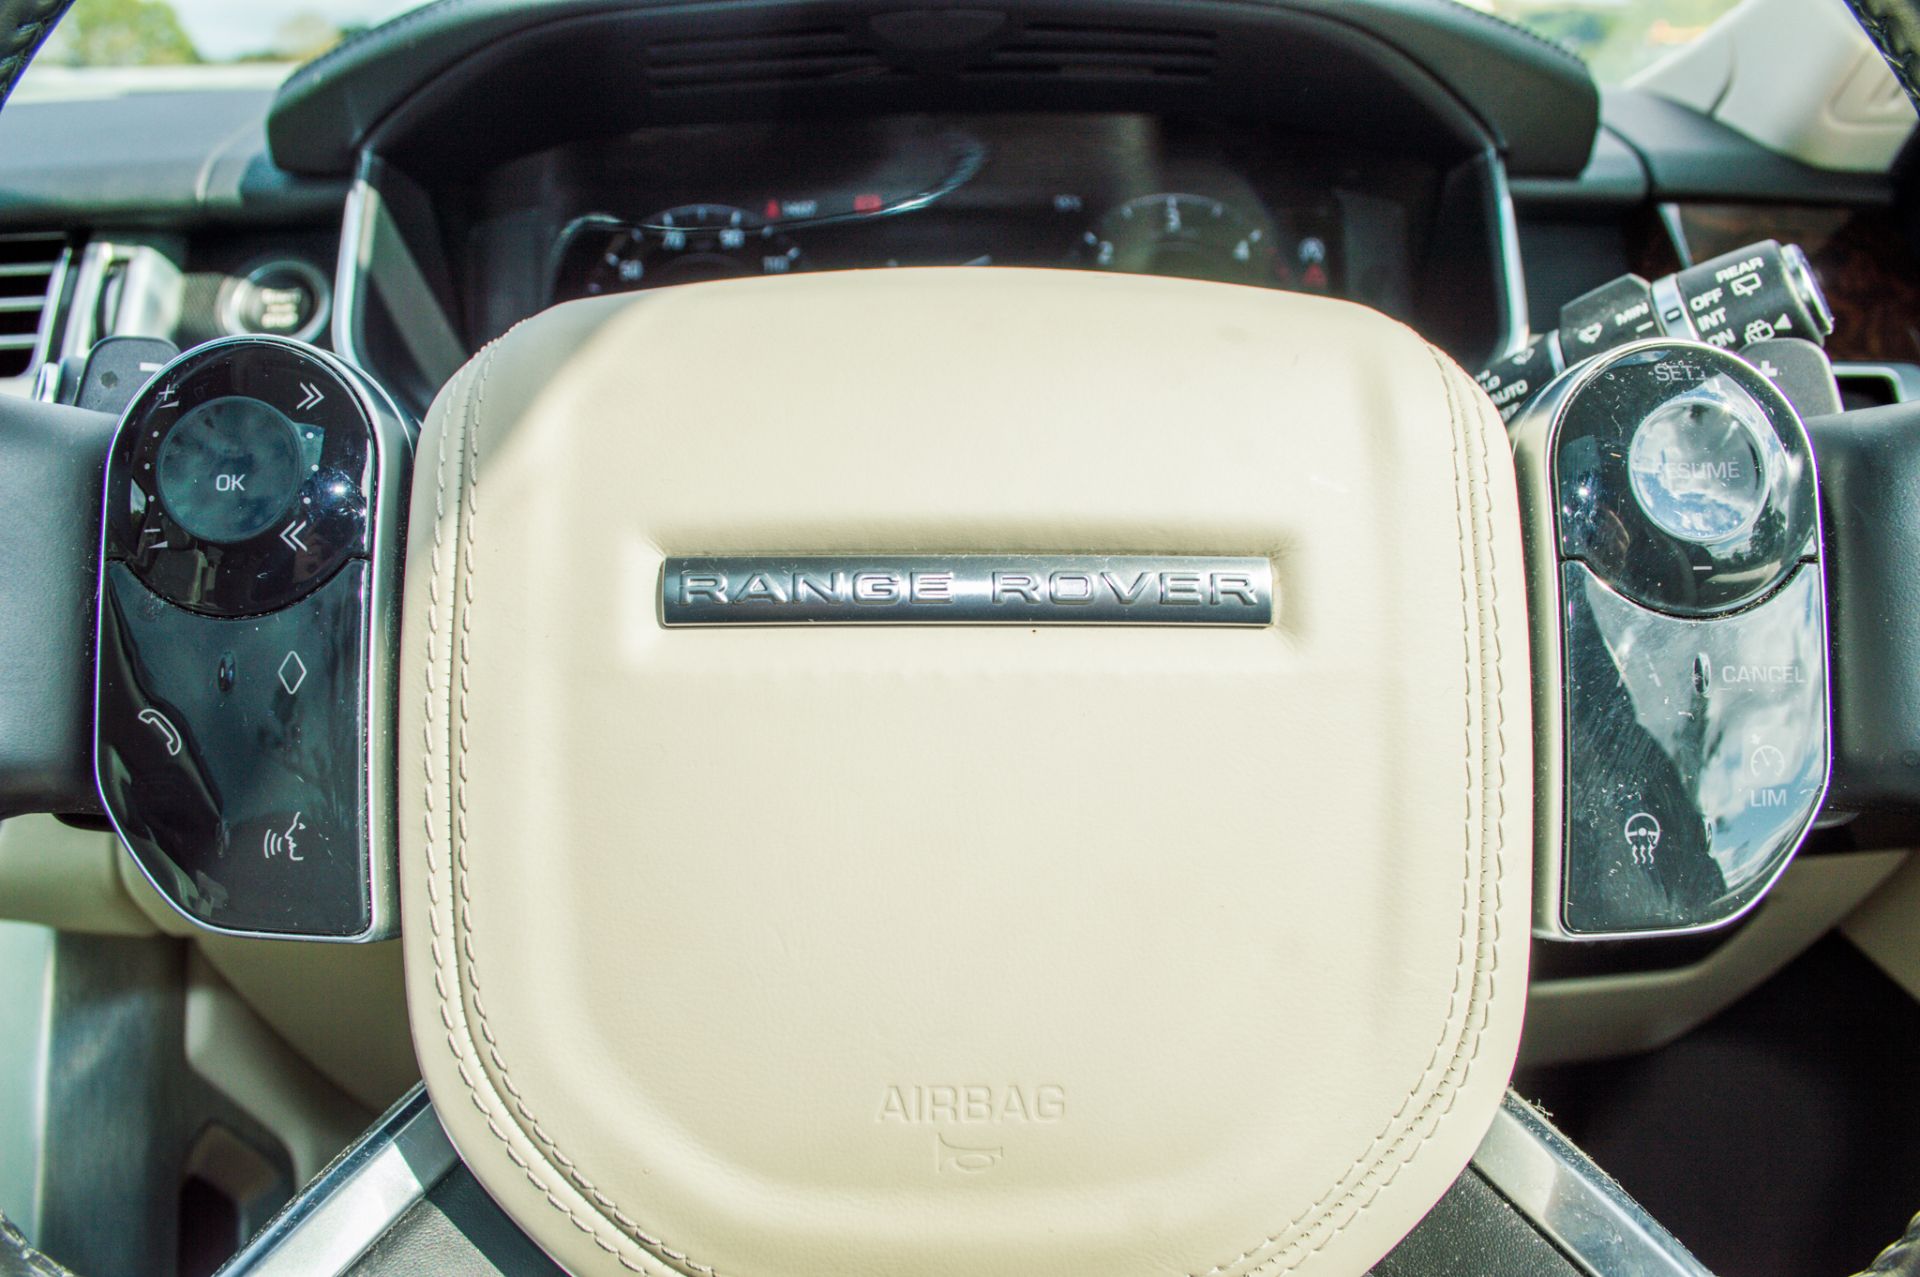 Range Rover Vogue TDV6 3.0 5 door diesel 4wd estate car - Image 35 of 35